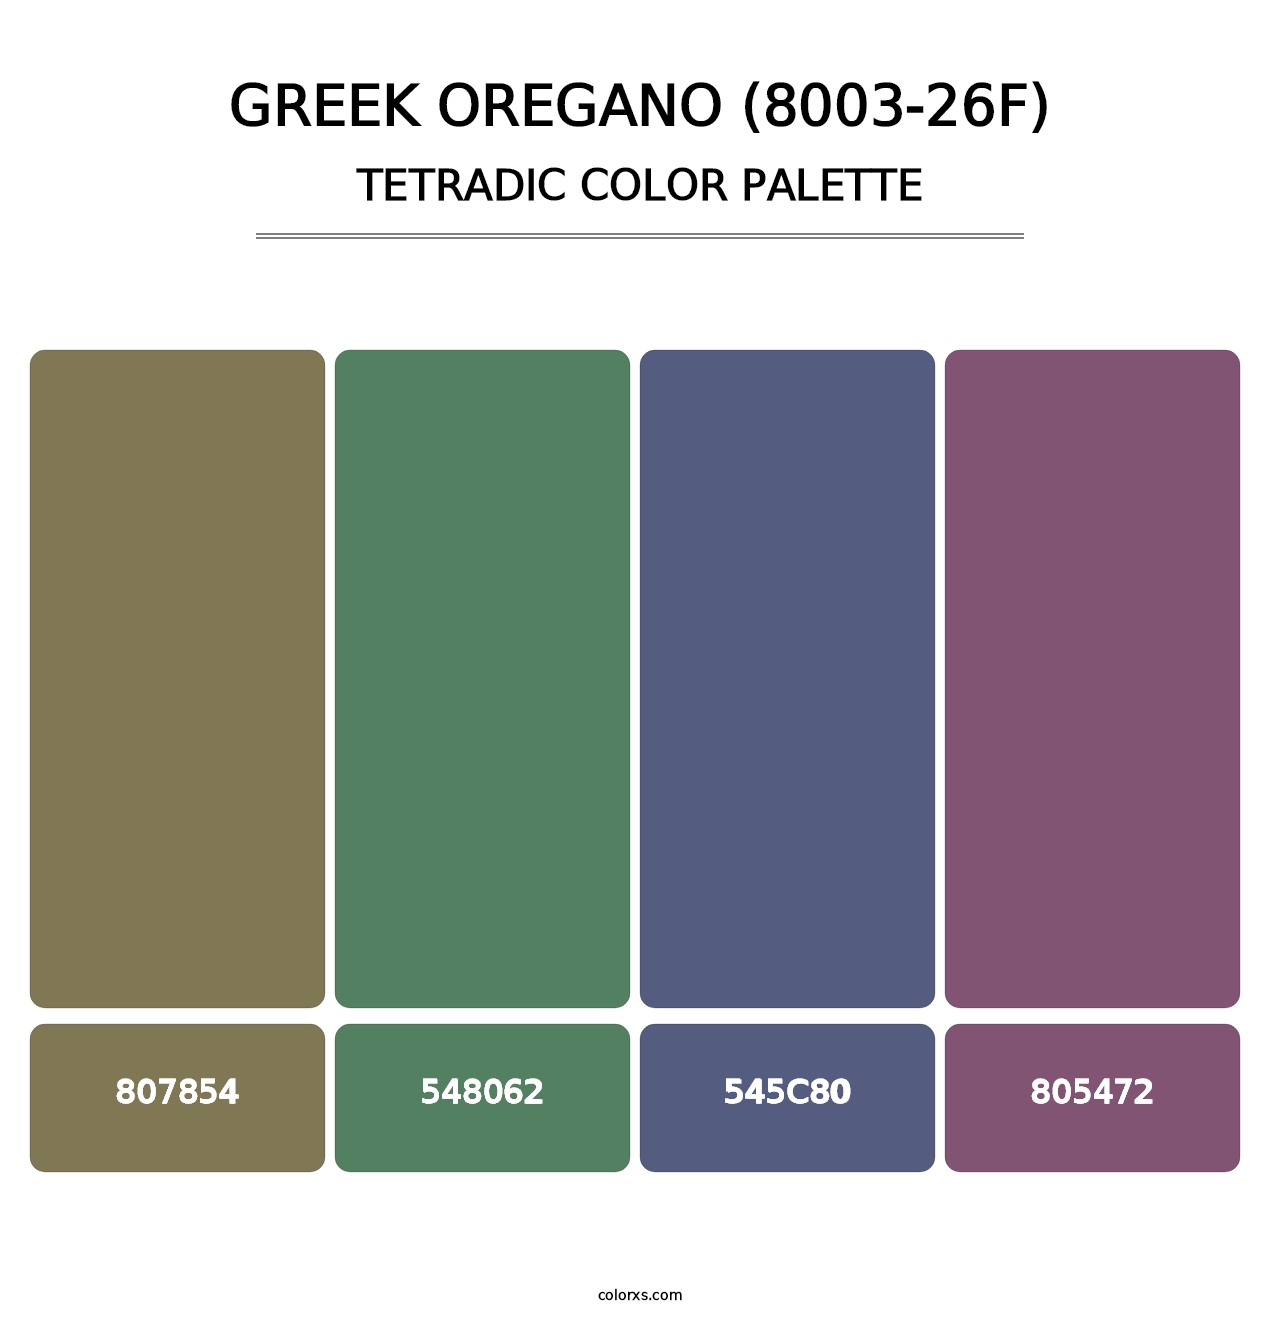 Greek Oregano (8003-26F) - Tetradic Color Palette